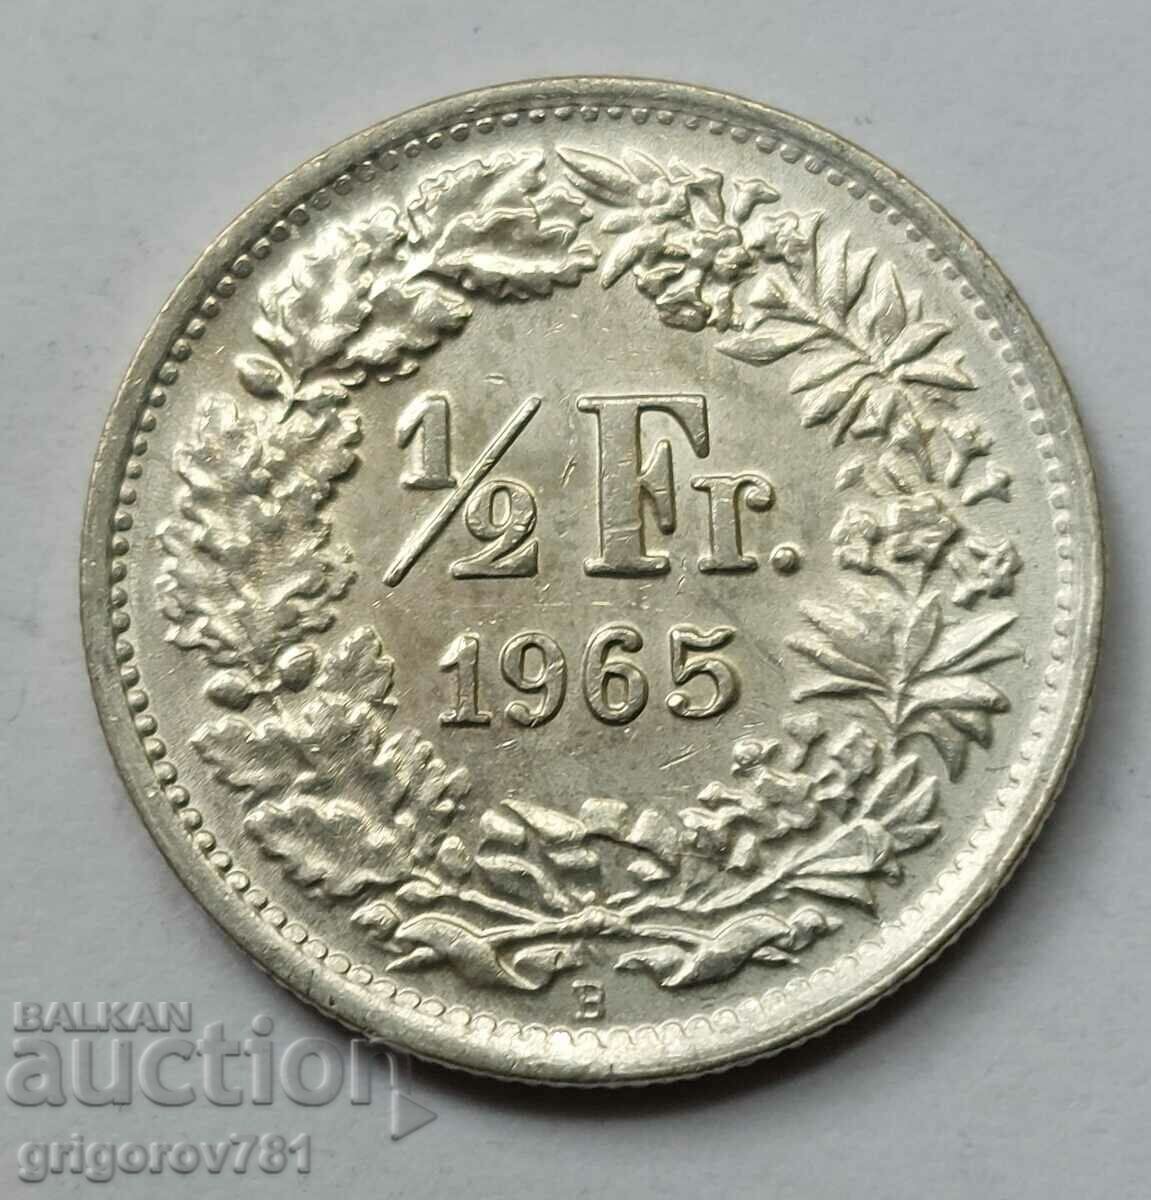 1/2 Franc Silver Switzerland 1965 B - Silver Coin #83